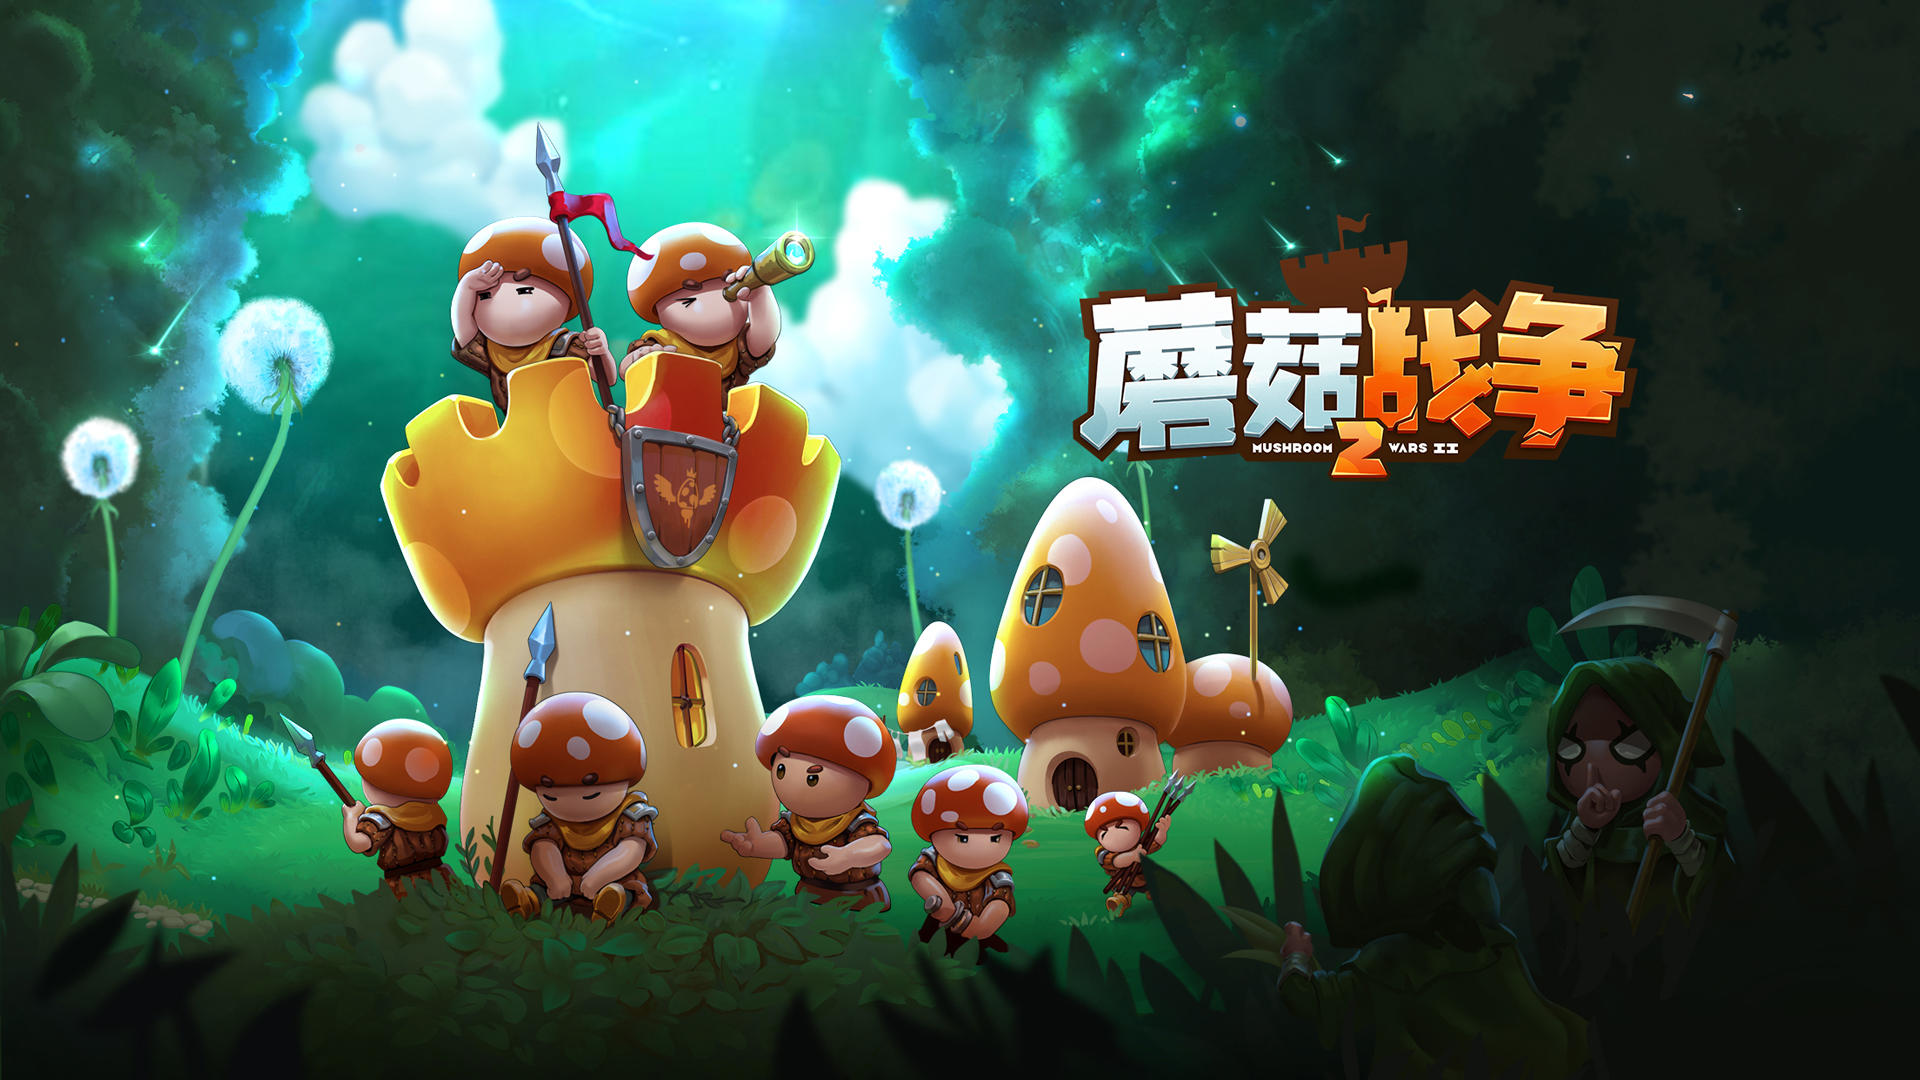 Banner of Mushroom Wars 2: Tower Defense 